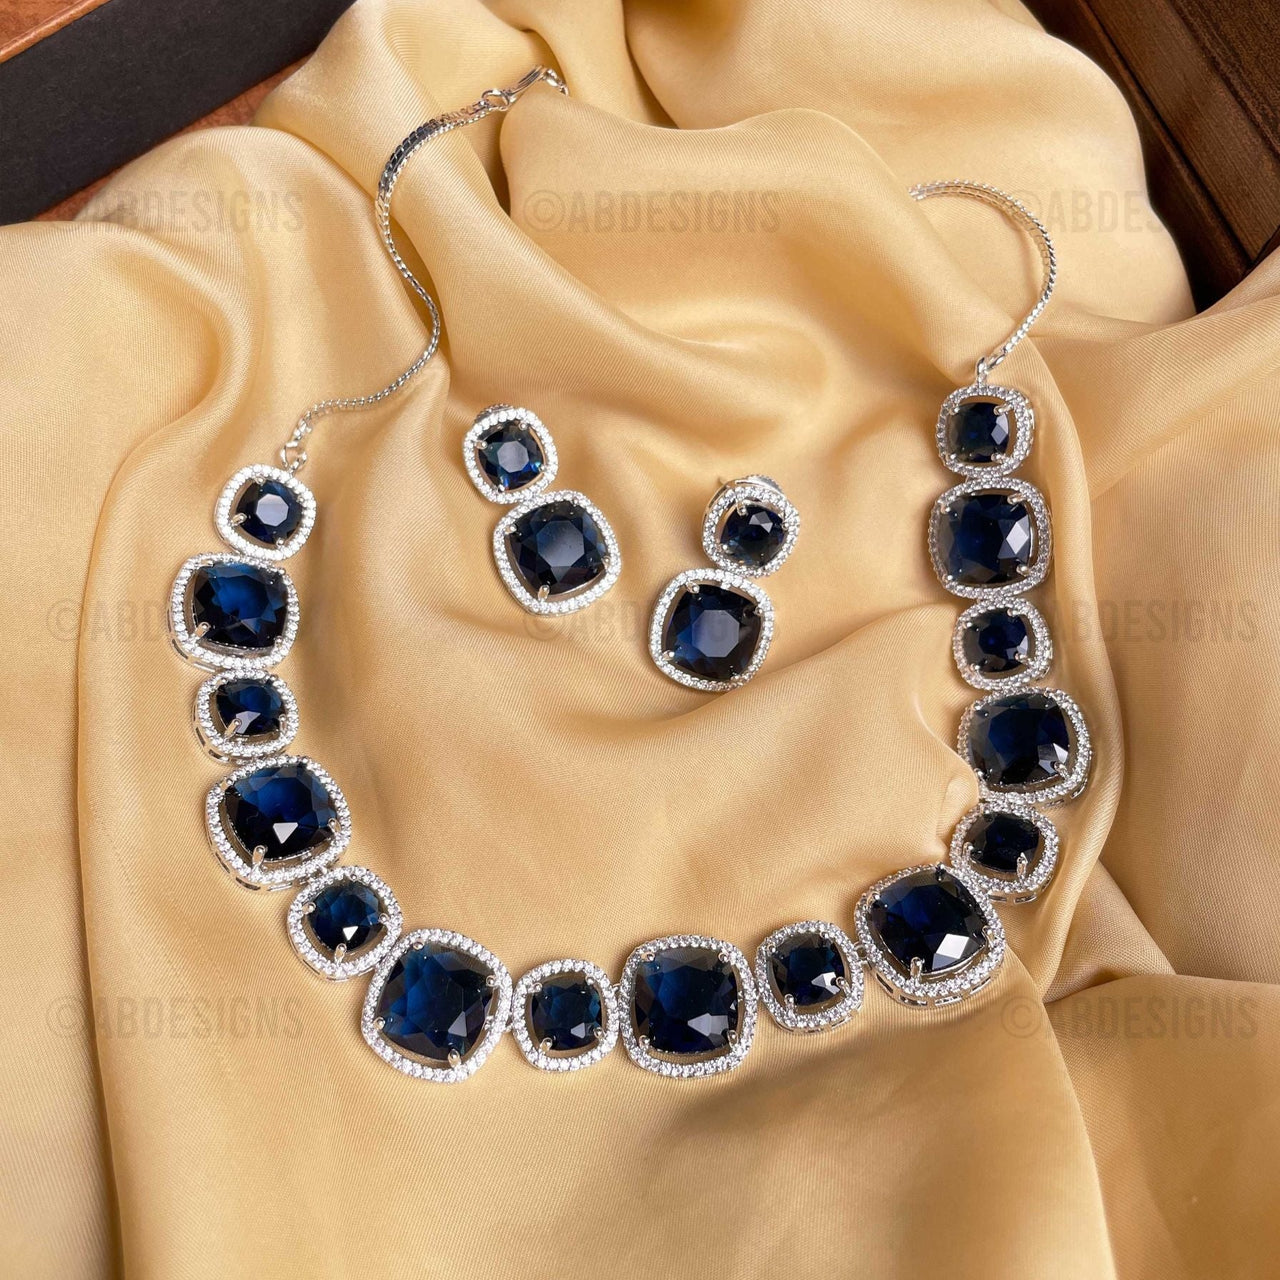 Celebrated Renowned Silver Diamond Choker Necklace - Abdesignsjewellery